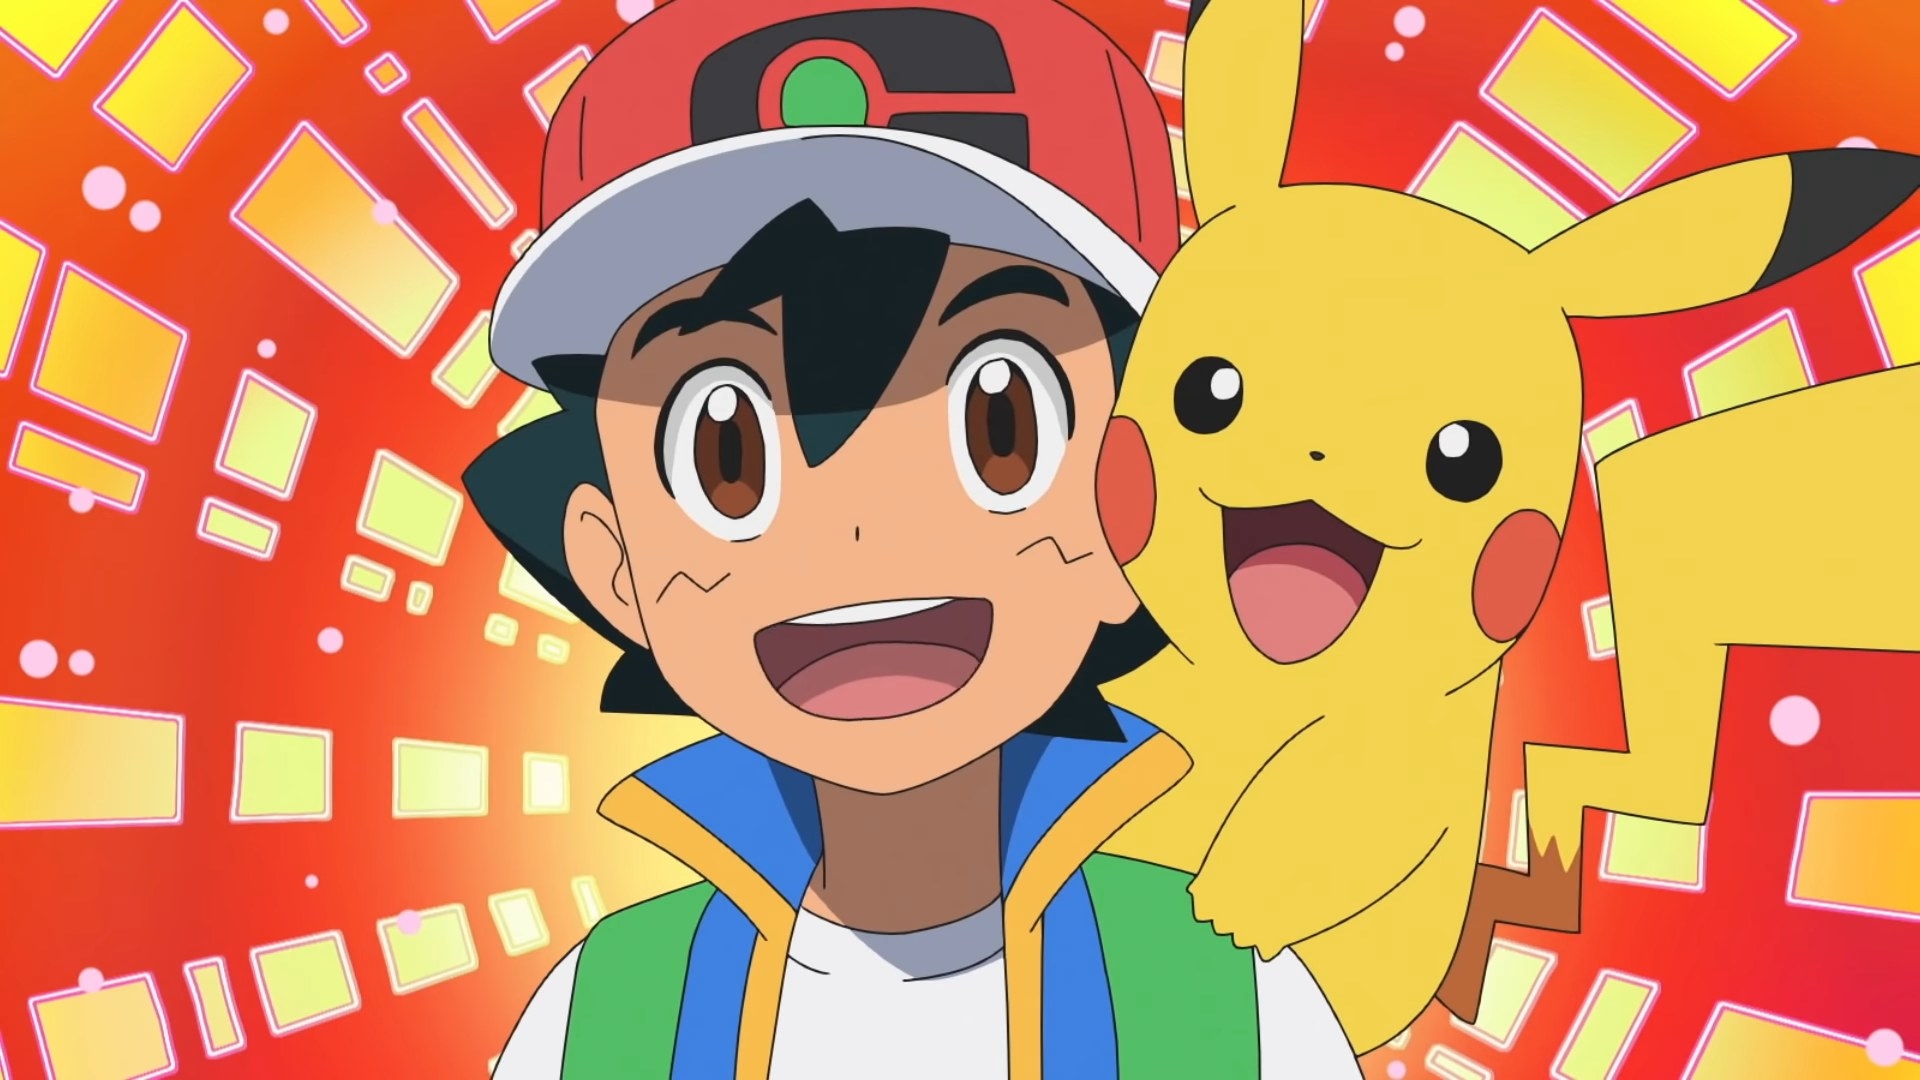 Ash and Pikachu smiling in &quot;Pokémon Journeys&quot;